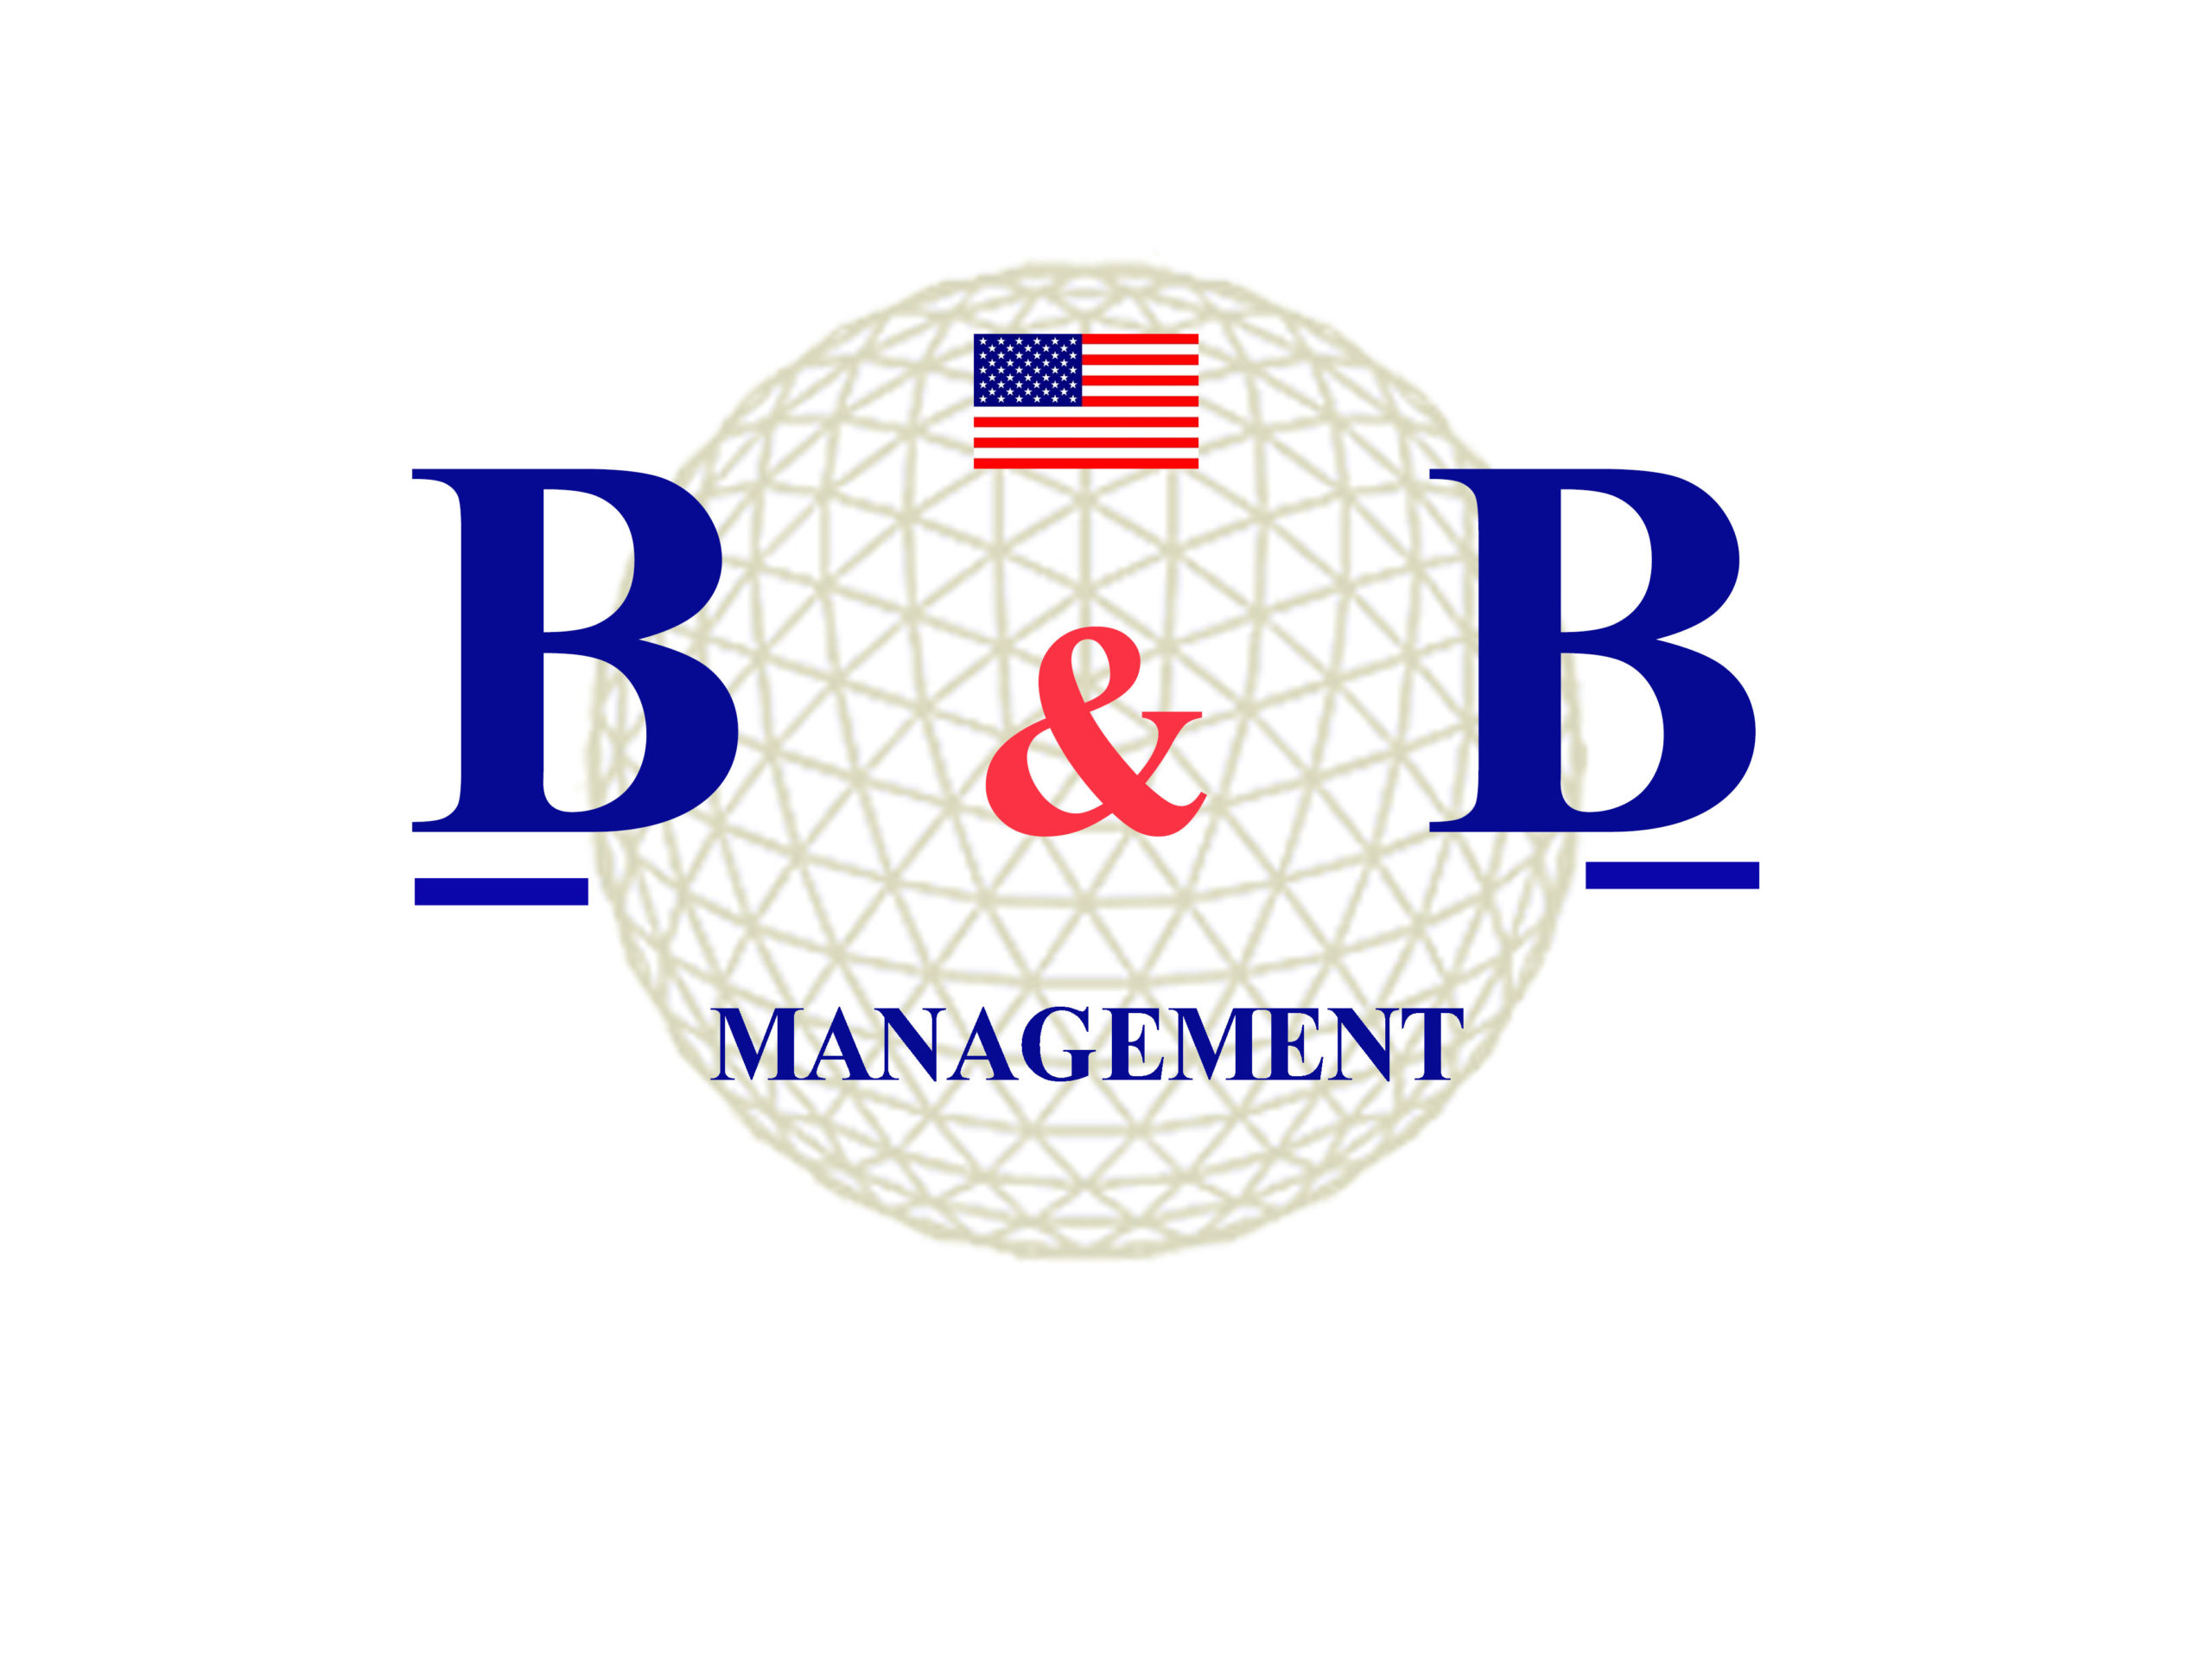 B&B Management